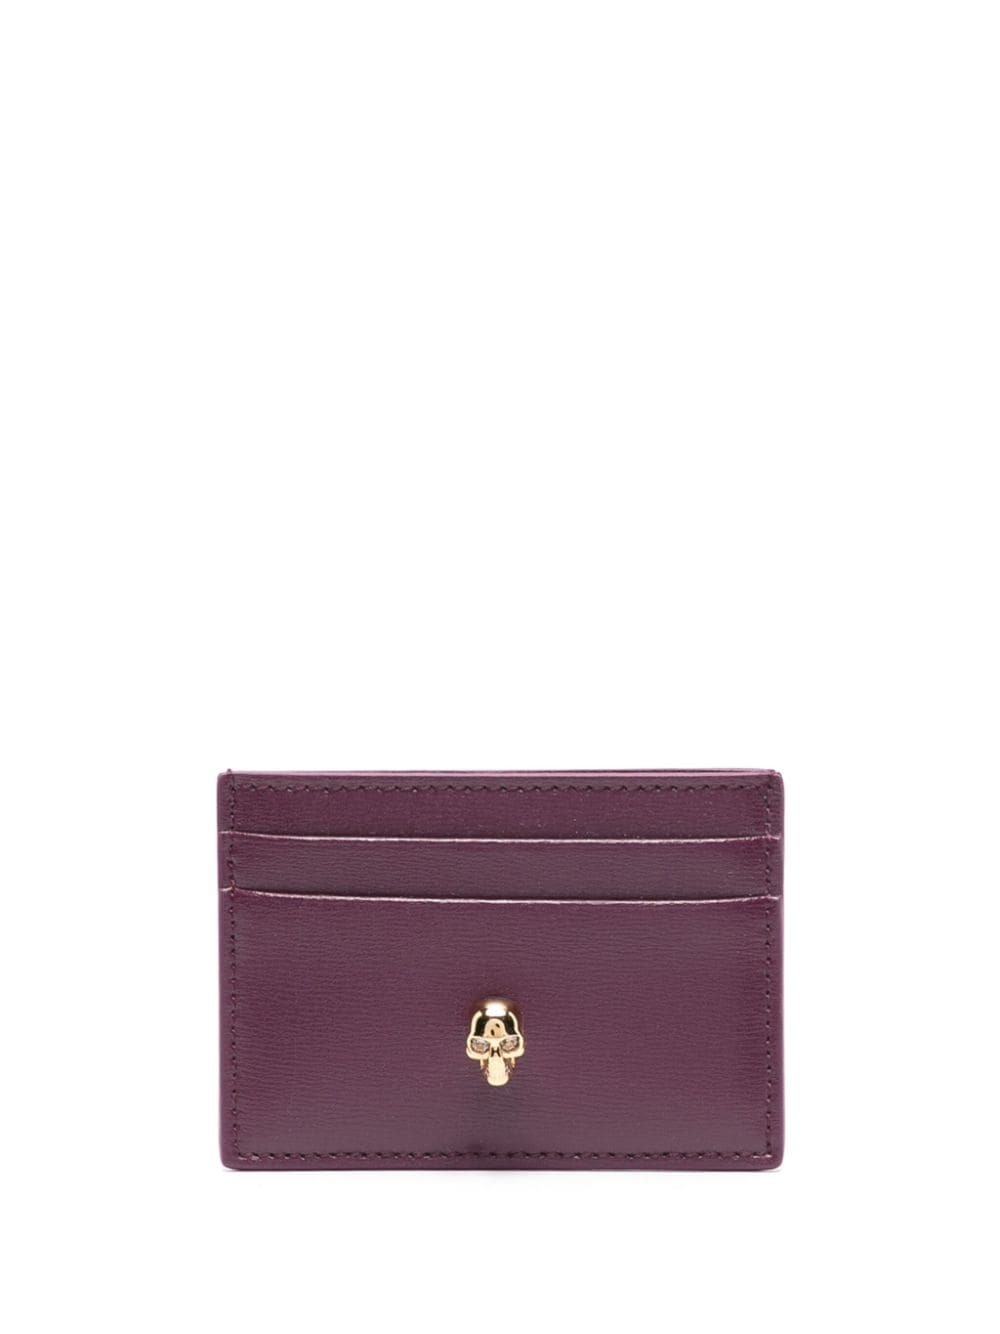 Accessories  Louis Vuitton Card Holder/wallet For Men/women For